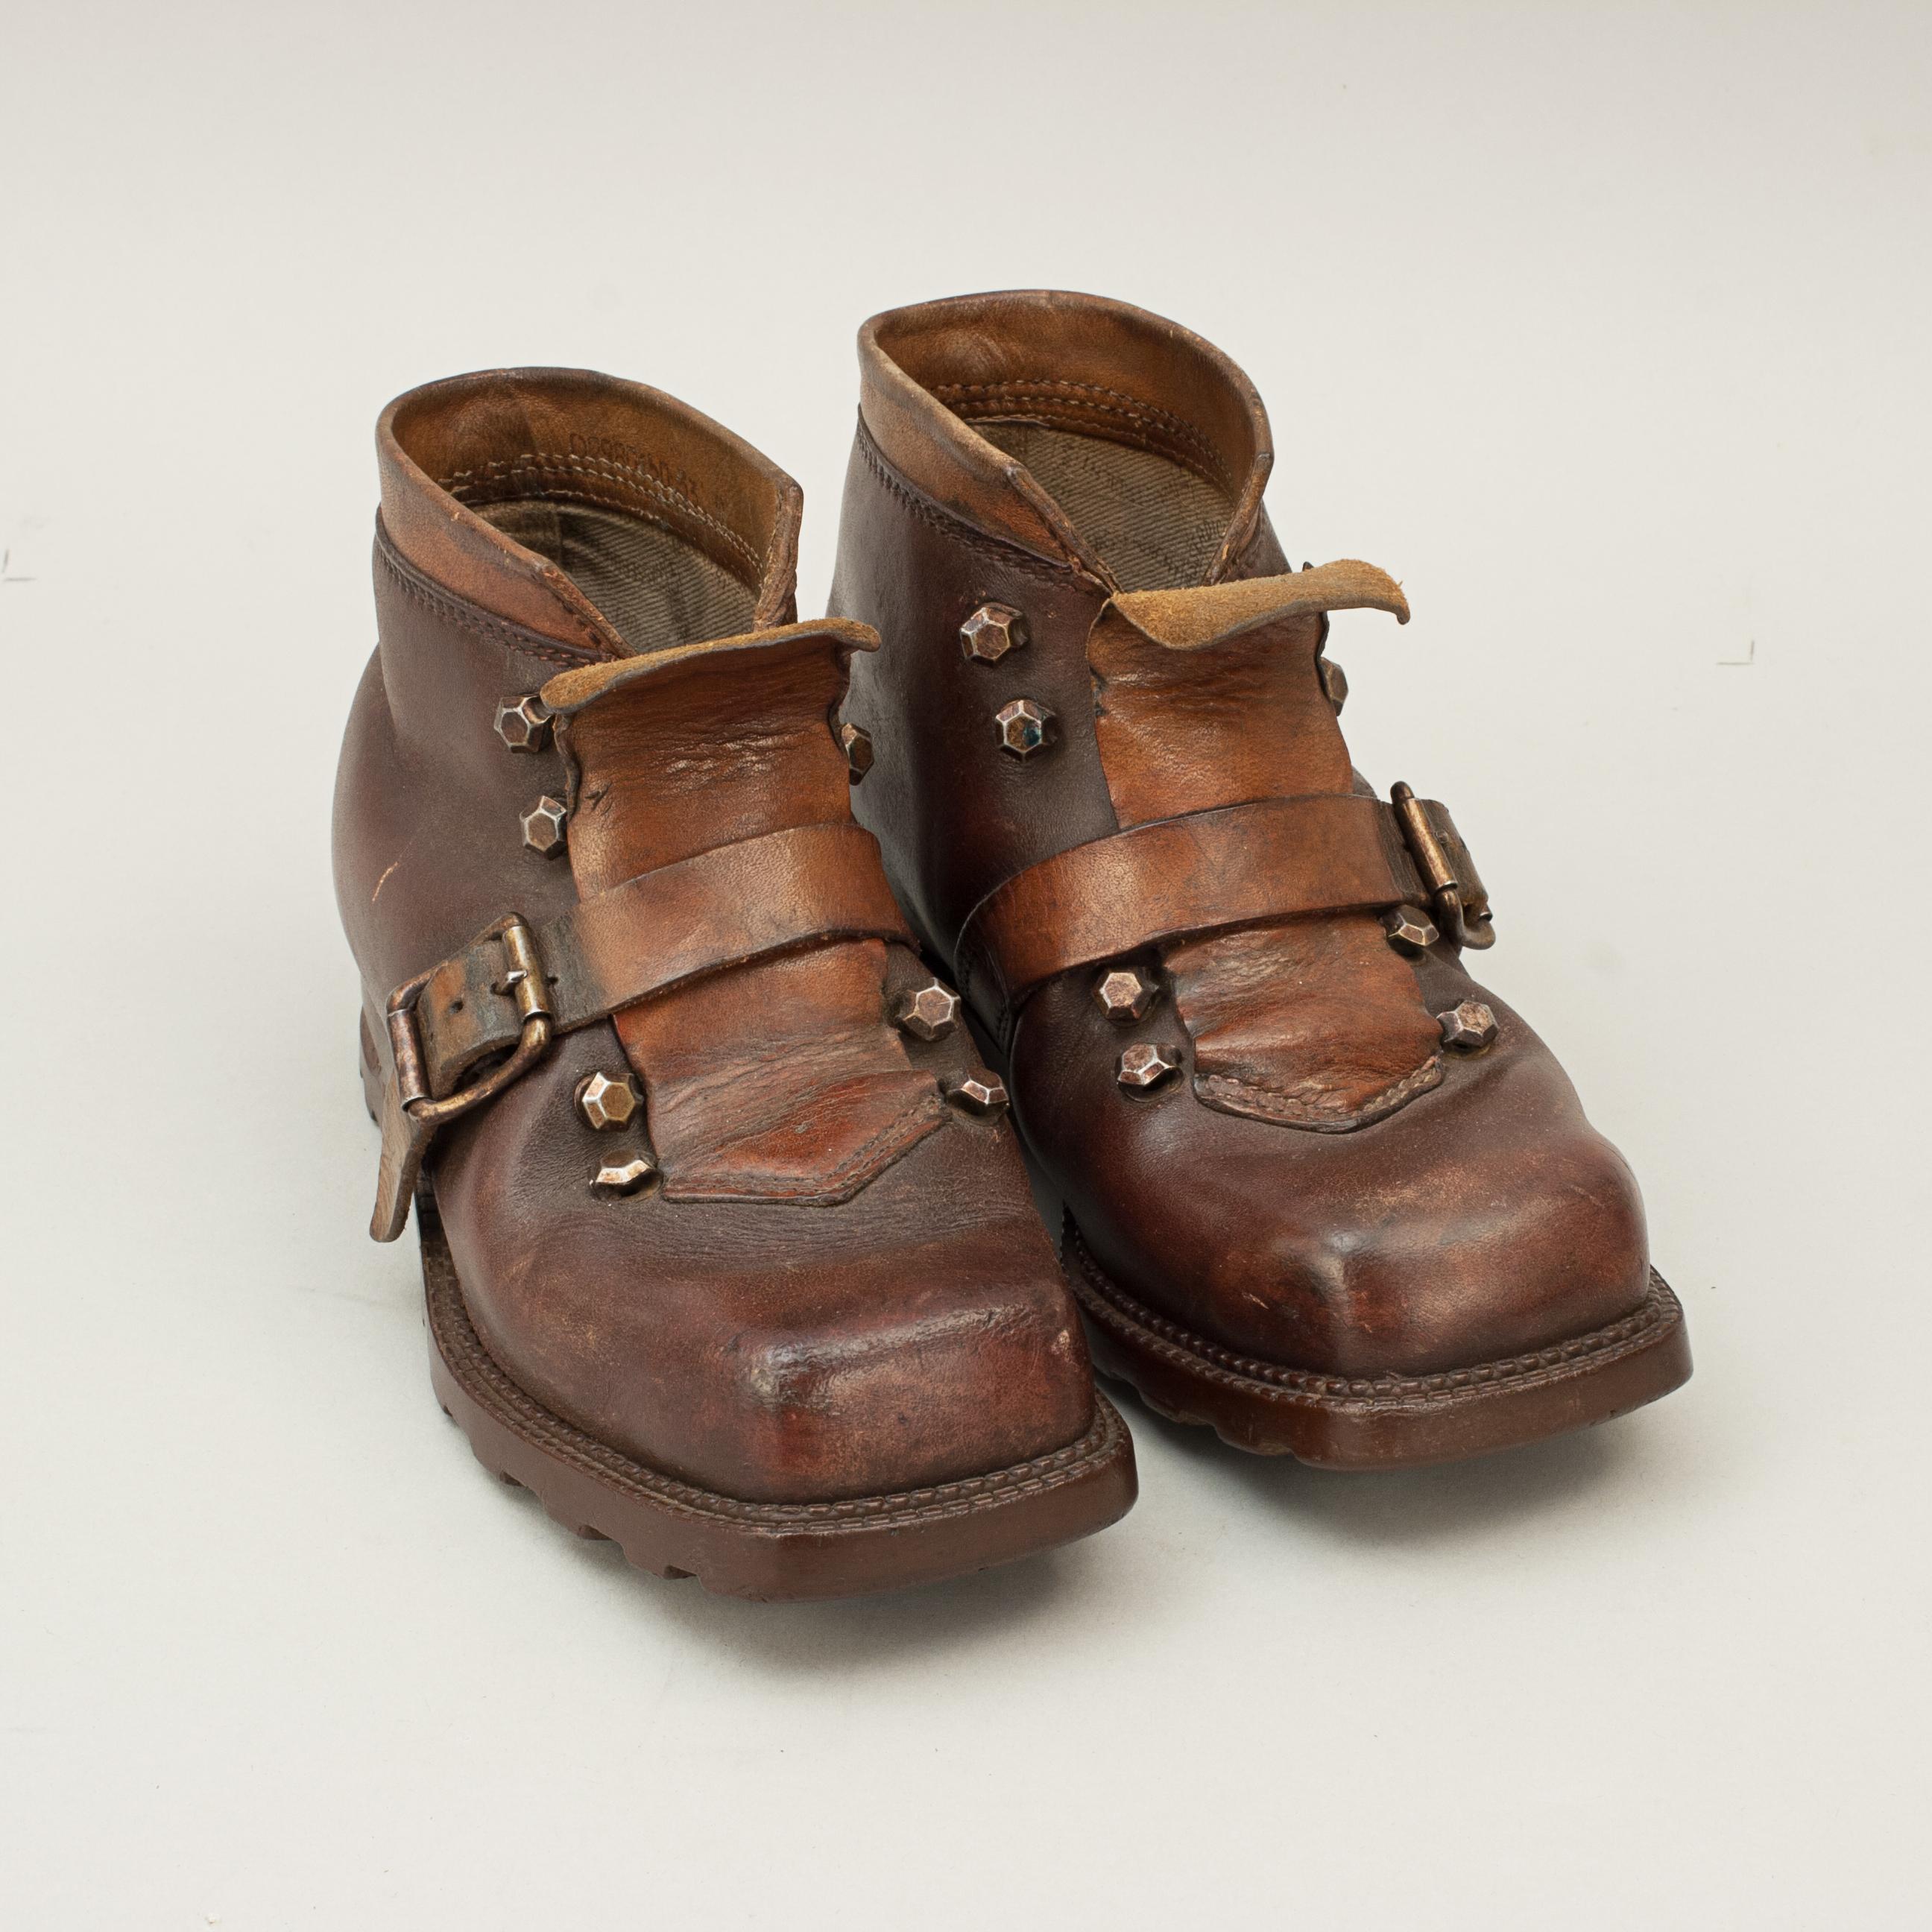 Pair of Vintage Children's Ski Boots in Leather, Wasserdicht For Sale 5